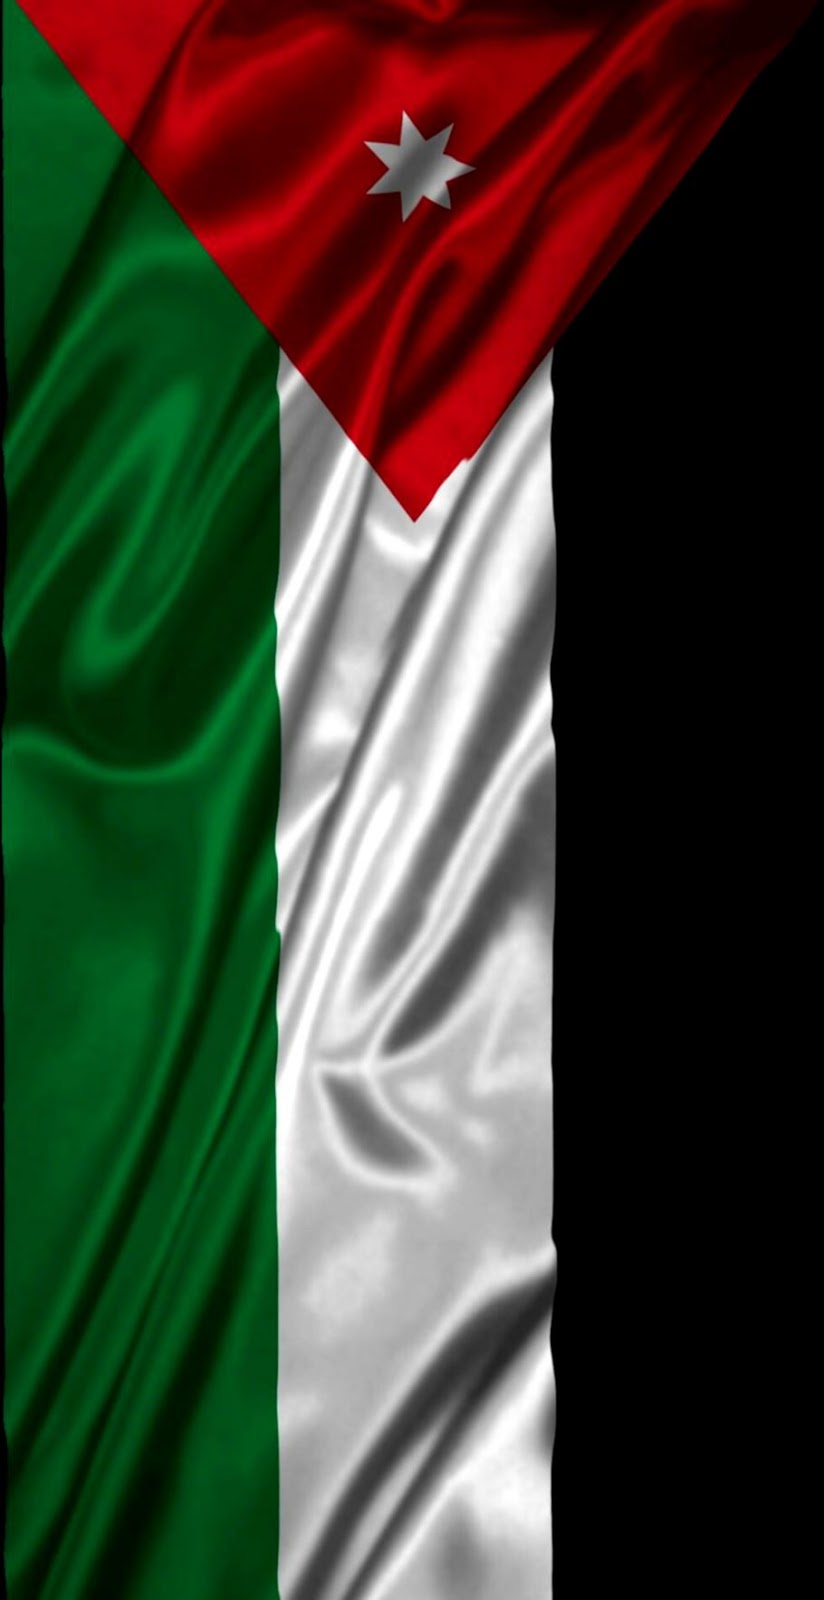 Jordan Countries Flag Artwork Wallpaper Magazine